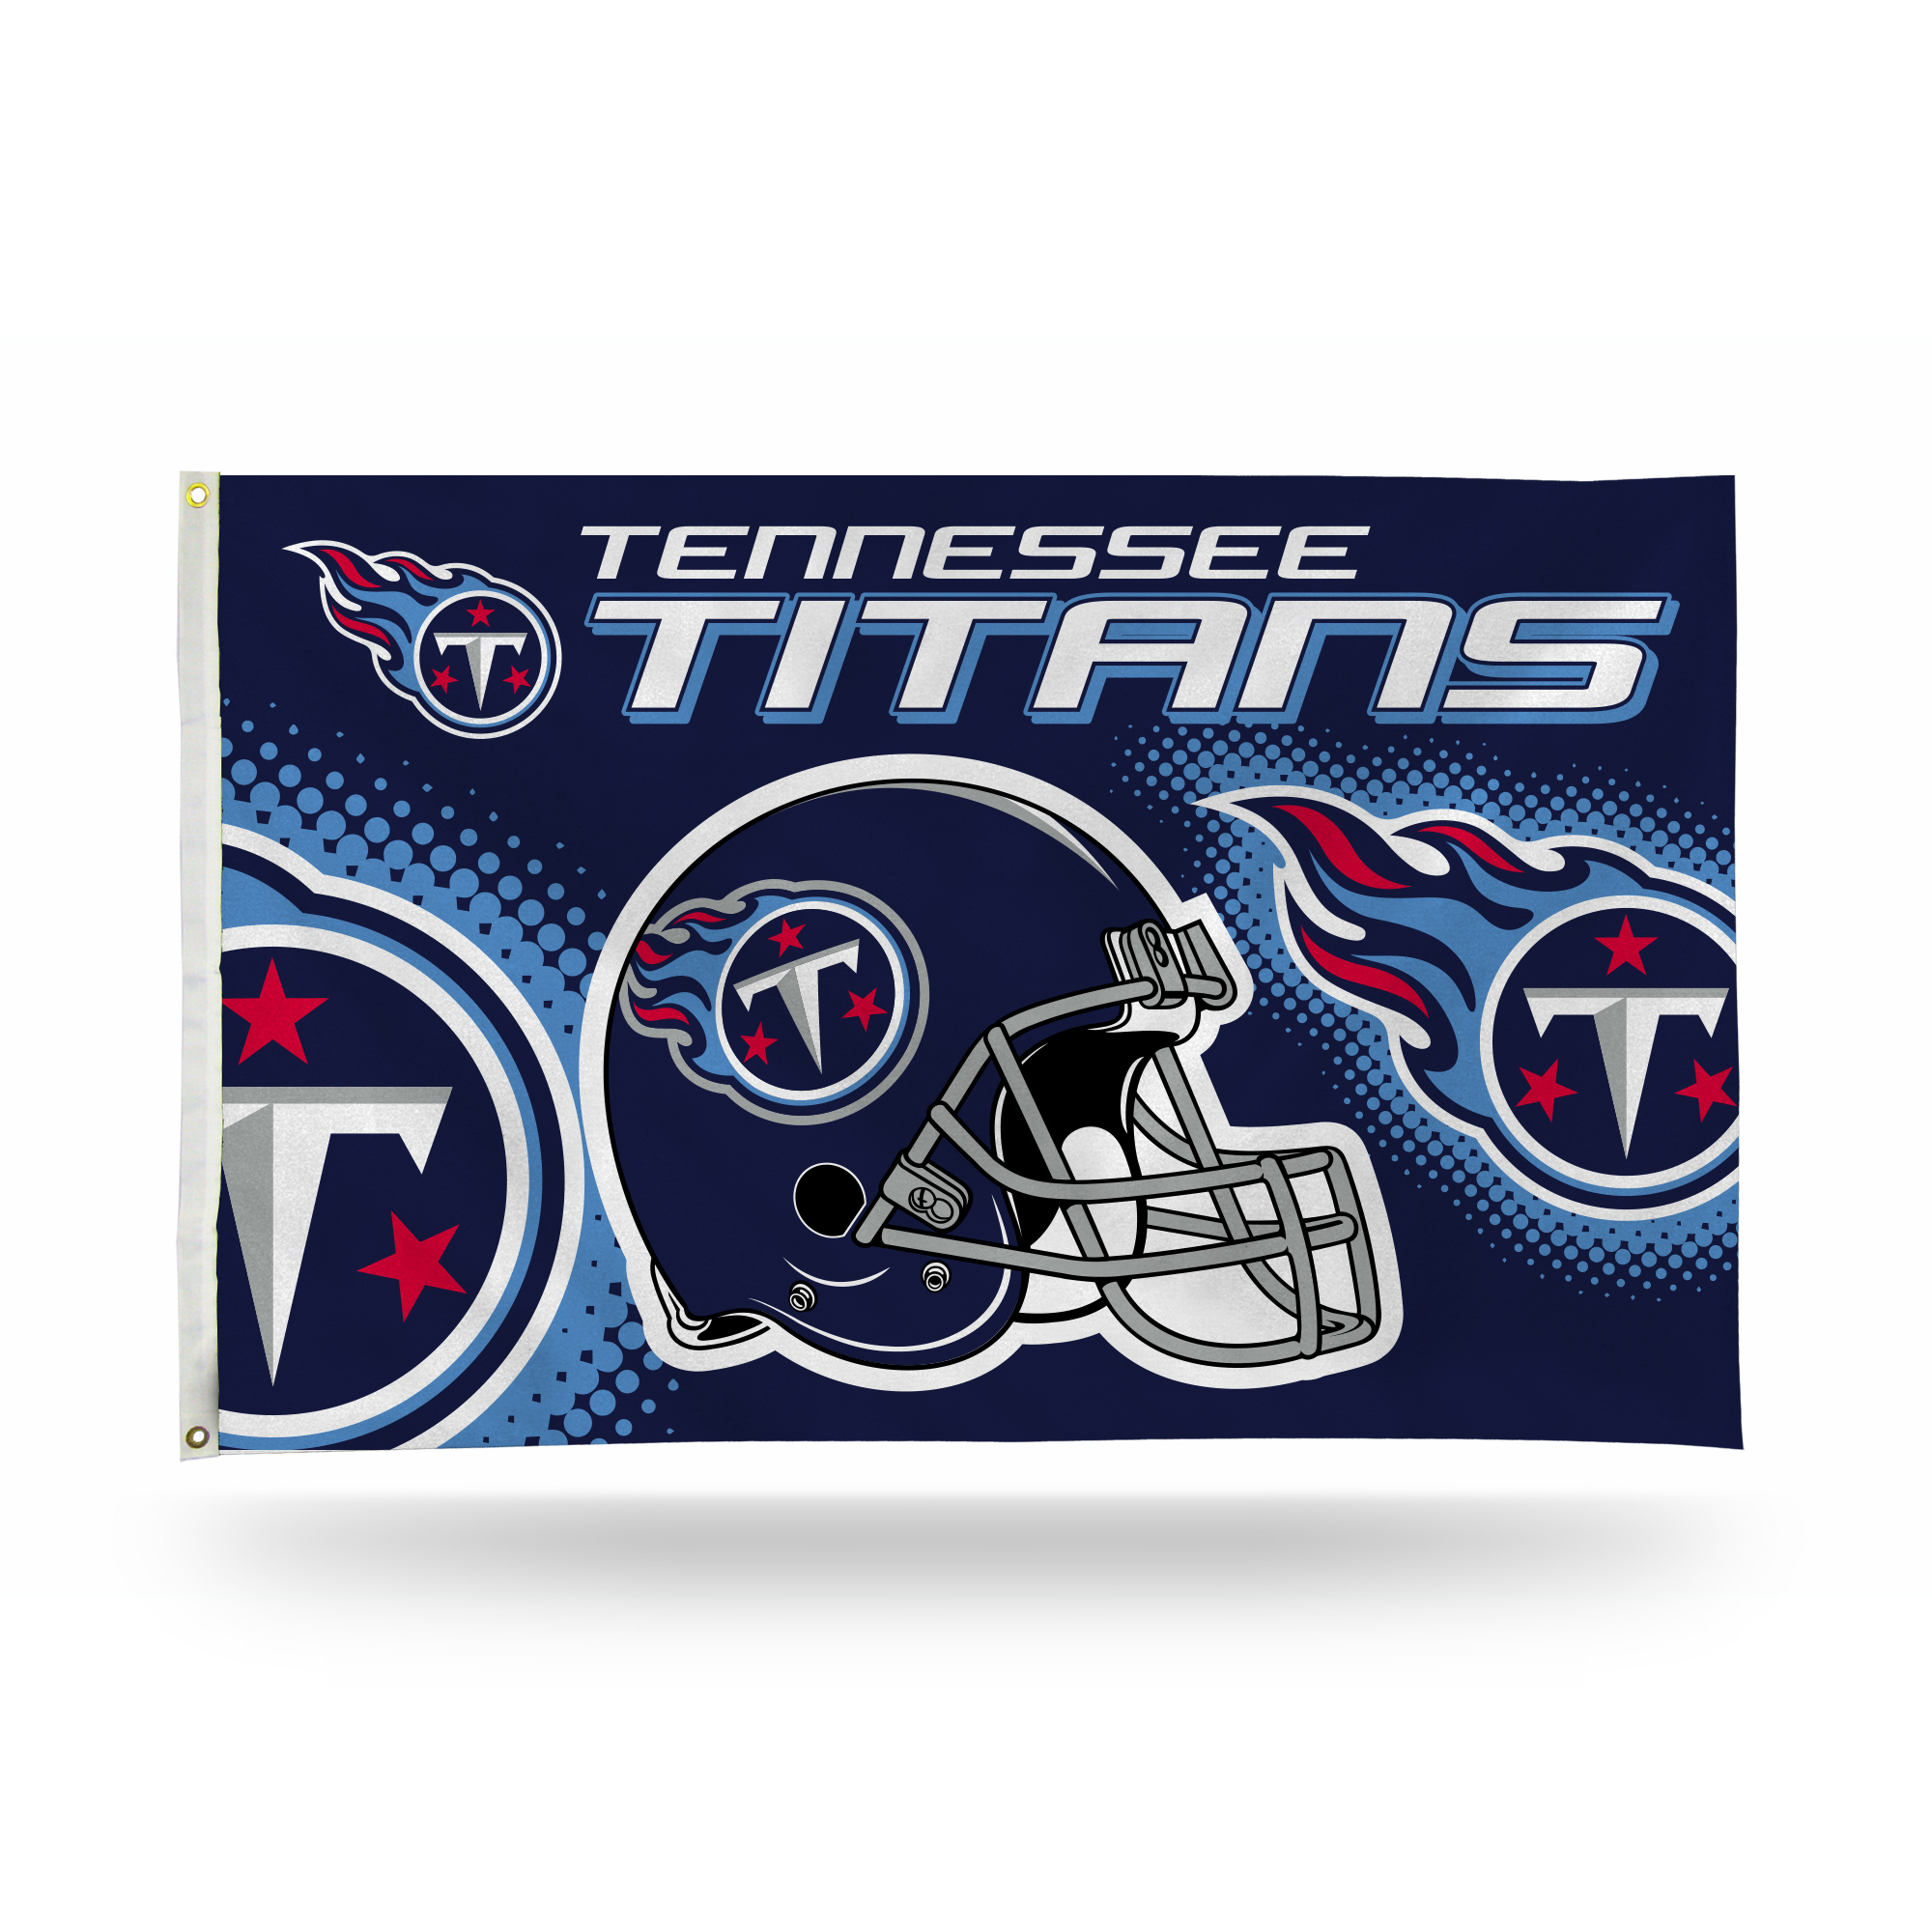 Rico NFL Rico Industries Tennessee Titans Helmet 3' x 5' Banner Flag